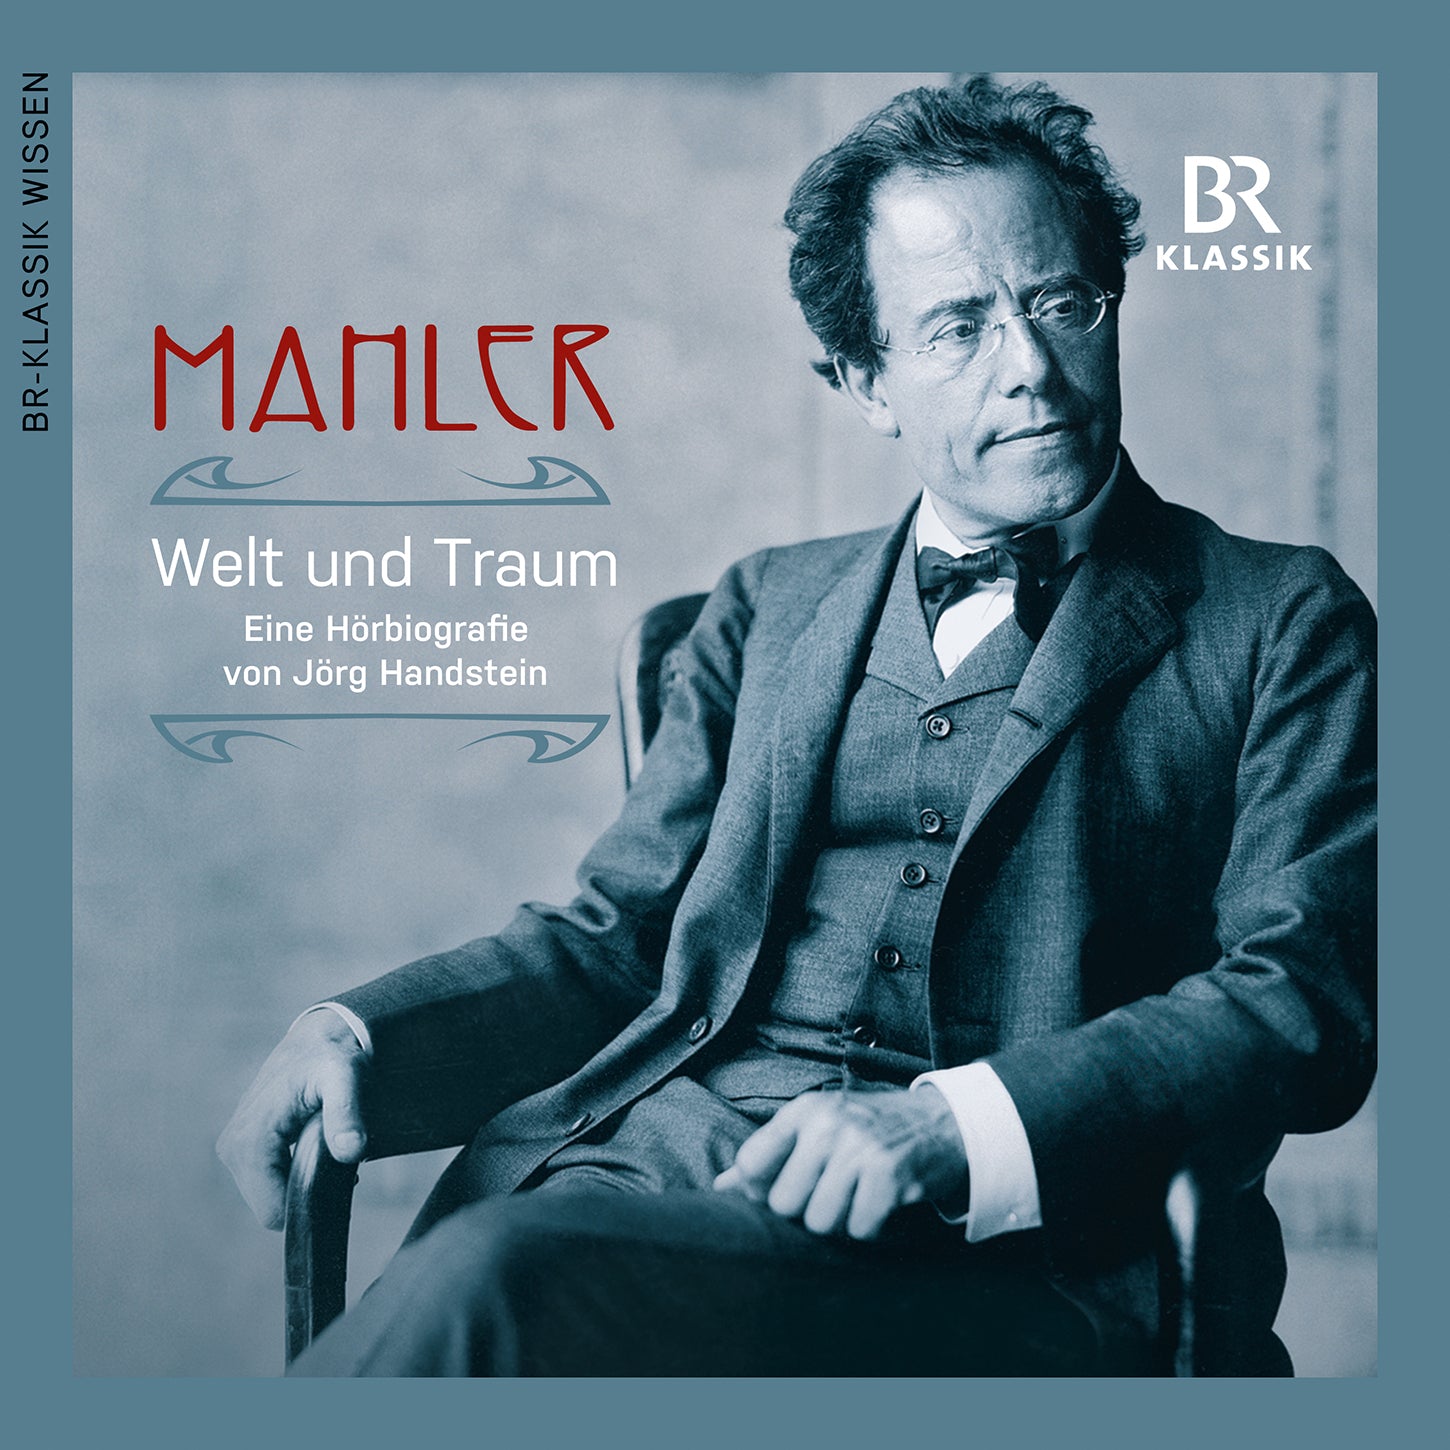 Mahler: World & Dream -  Audio Biography by Joerg Handstein